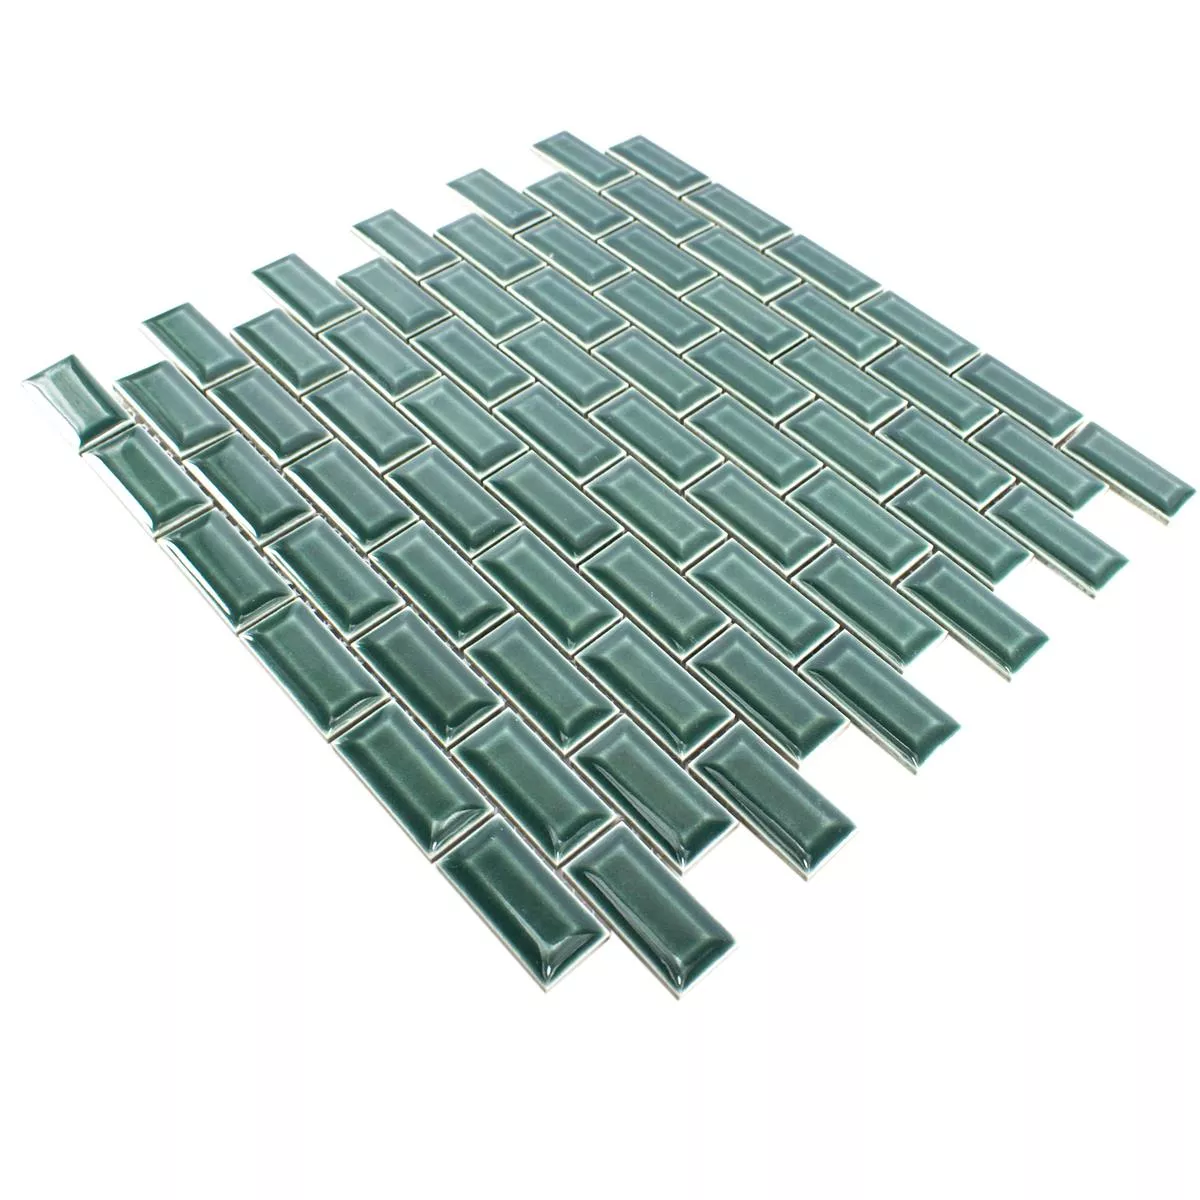 Ceramic Mosaic Tiles Organica Metro Green